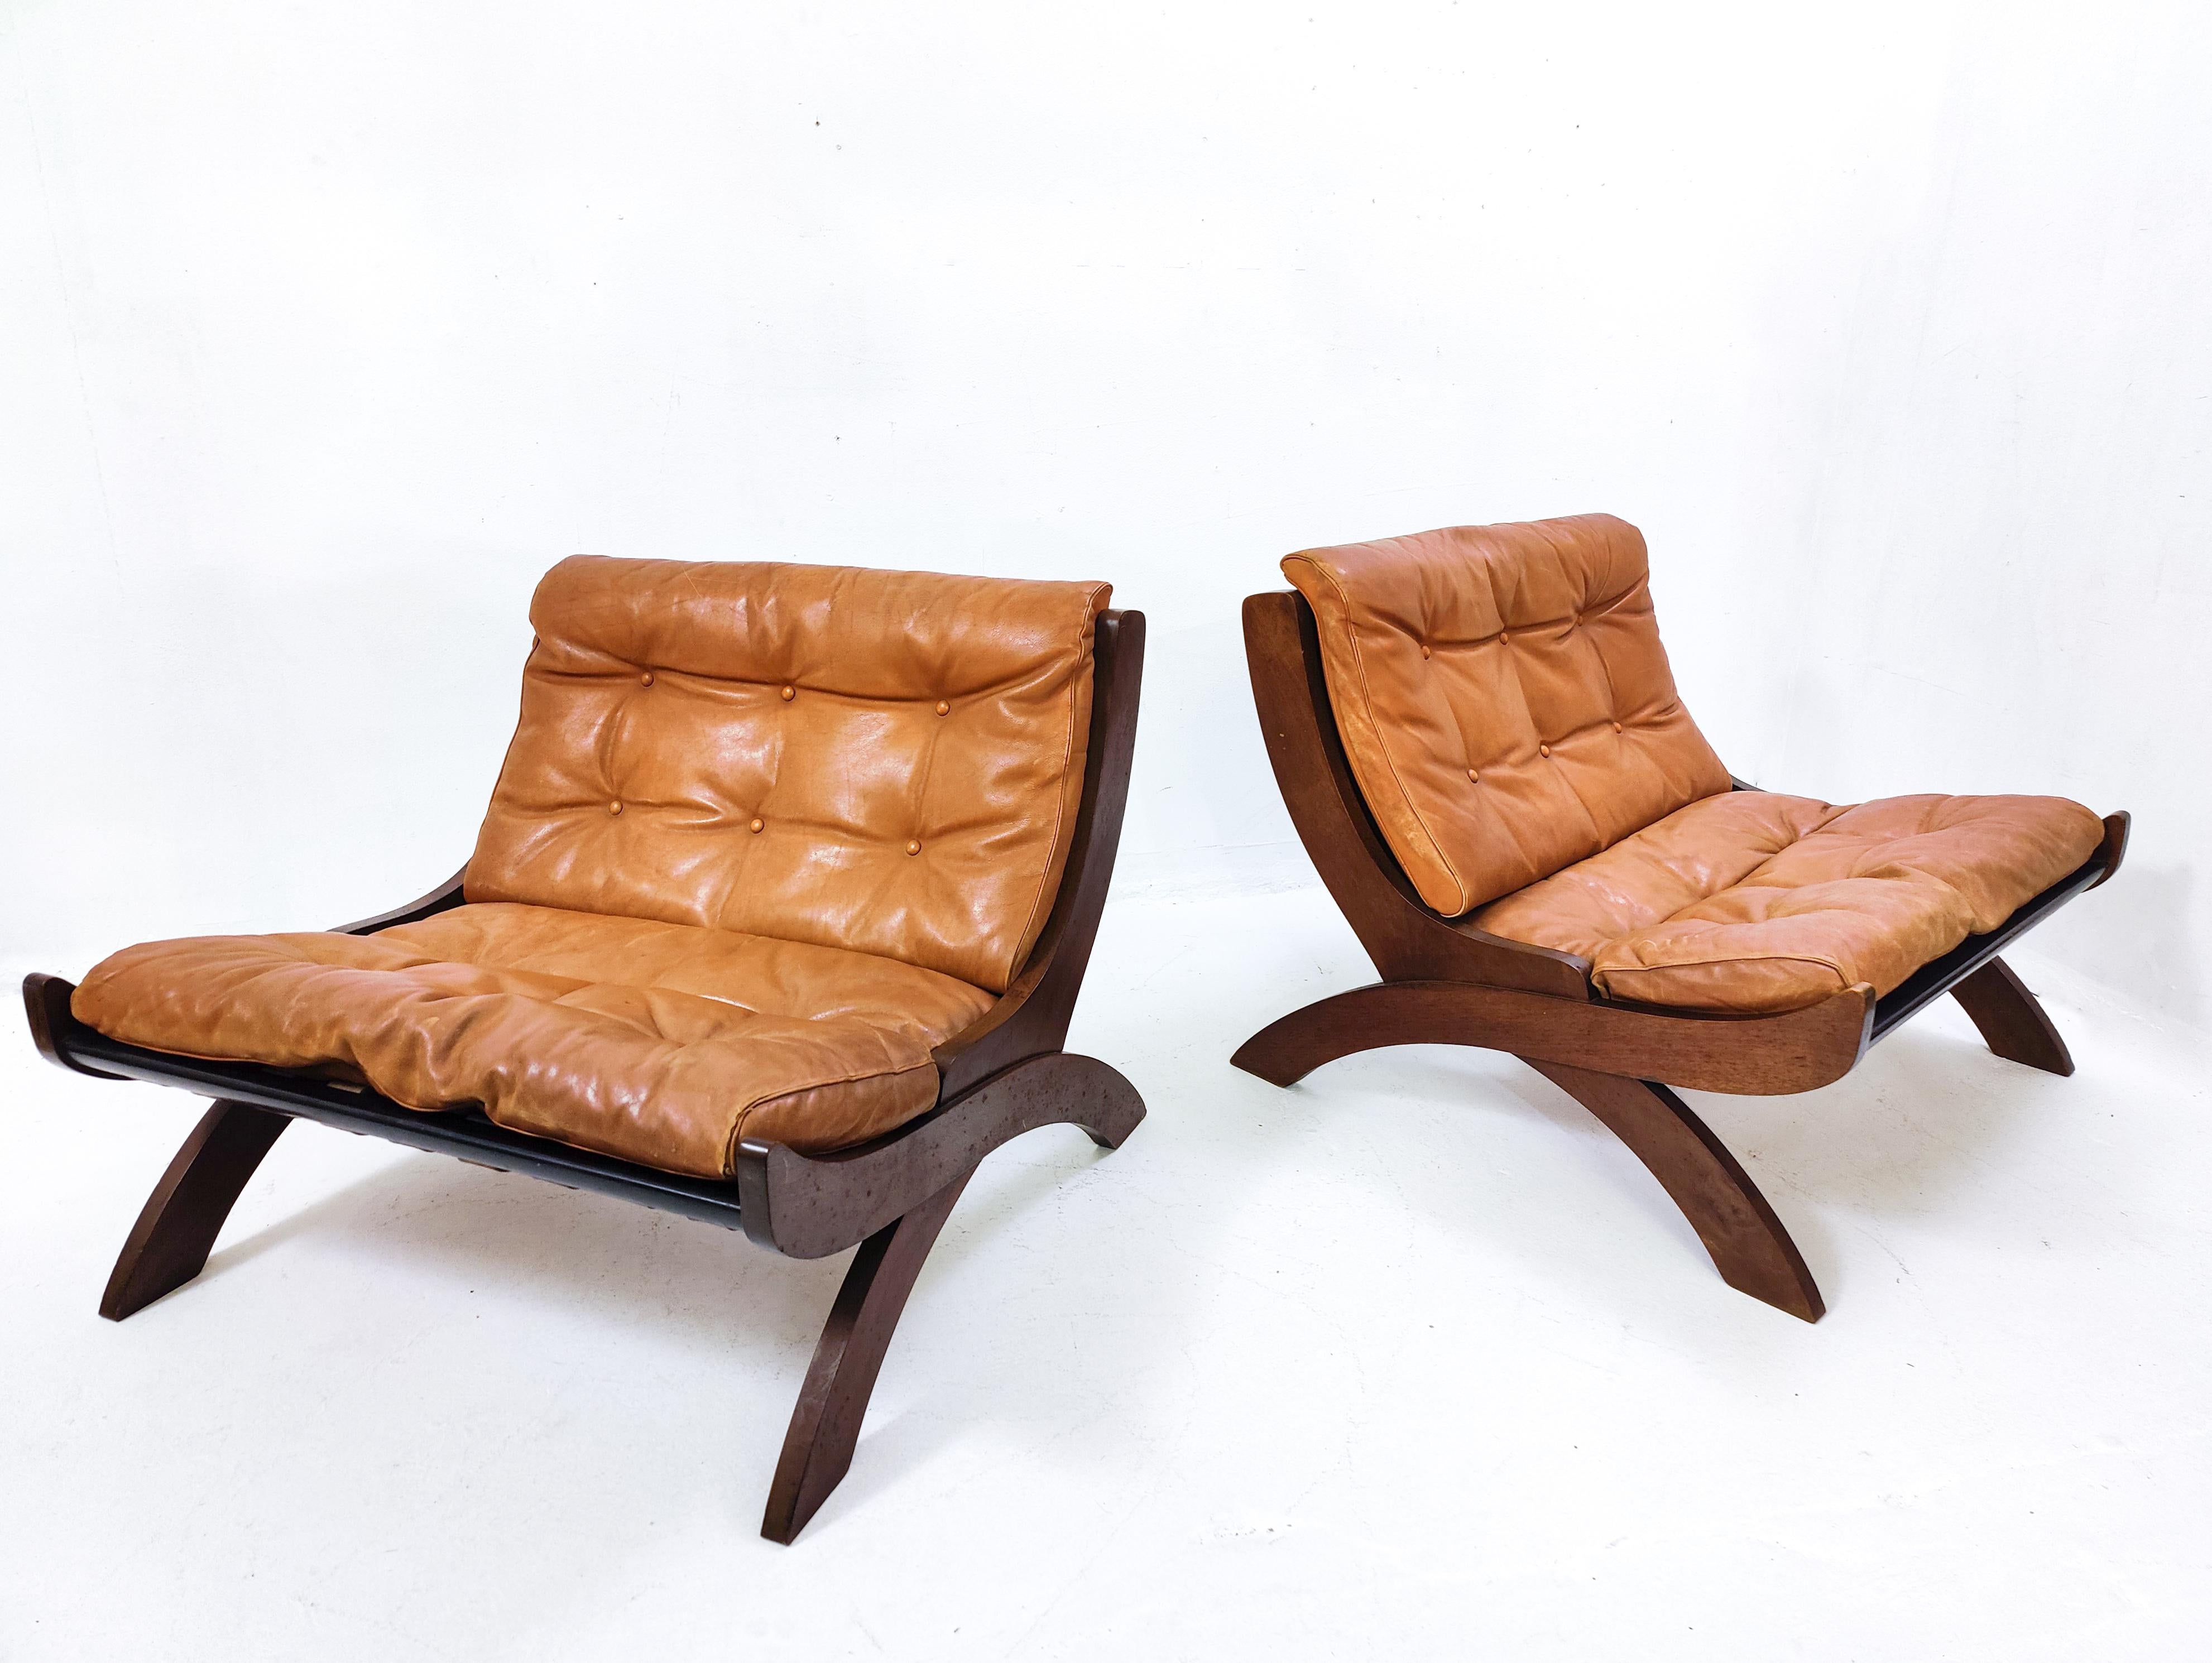 Mid-Century Modern Italian Cognac leather armchairs, 1960s.

